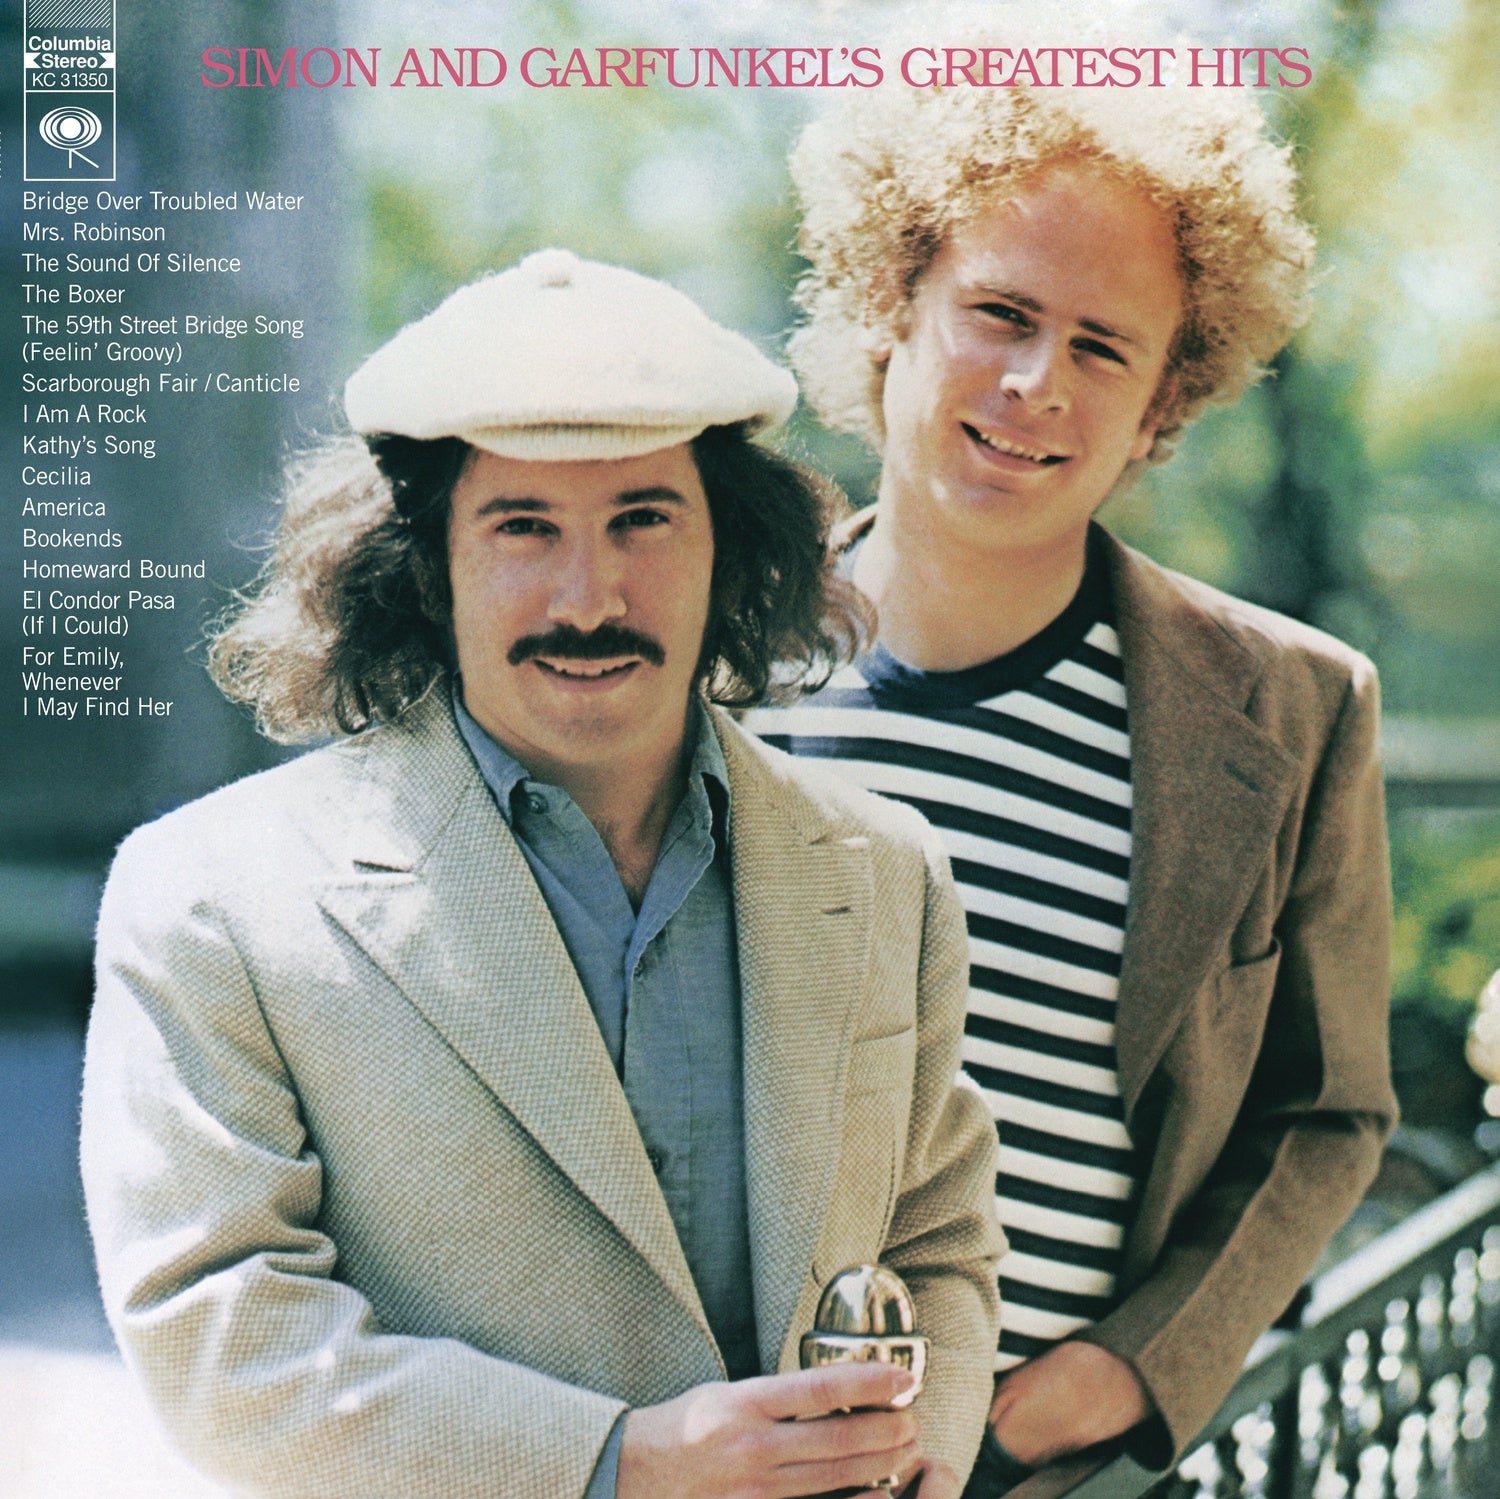 Simon & Garfunkel ‎– Simon And Garfunkel's Greatest Hits (1972) - New LP Record 2018 Columbia USA Vinyl - Pop Rock / Classic Rock / Folk Rock